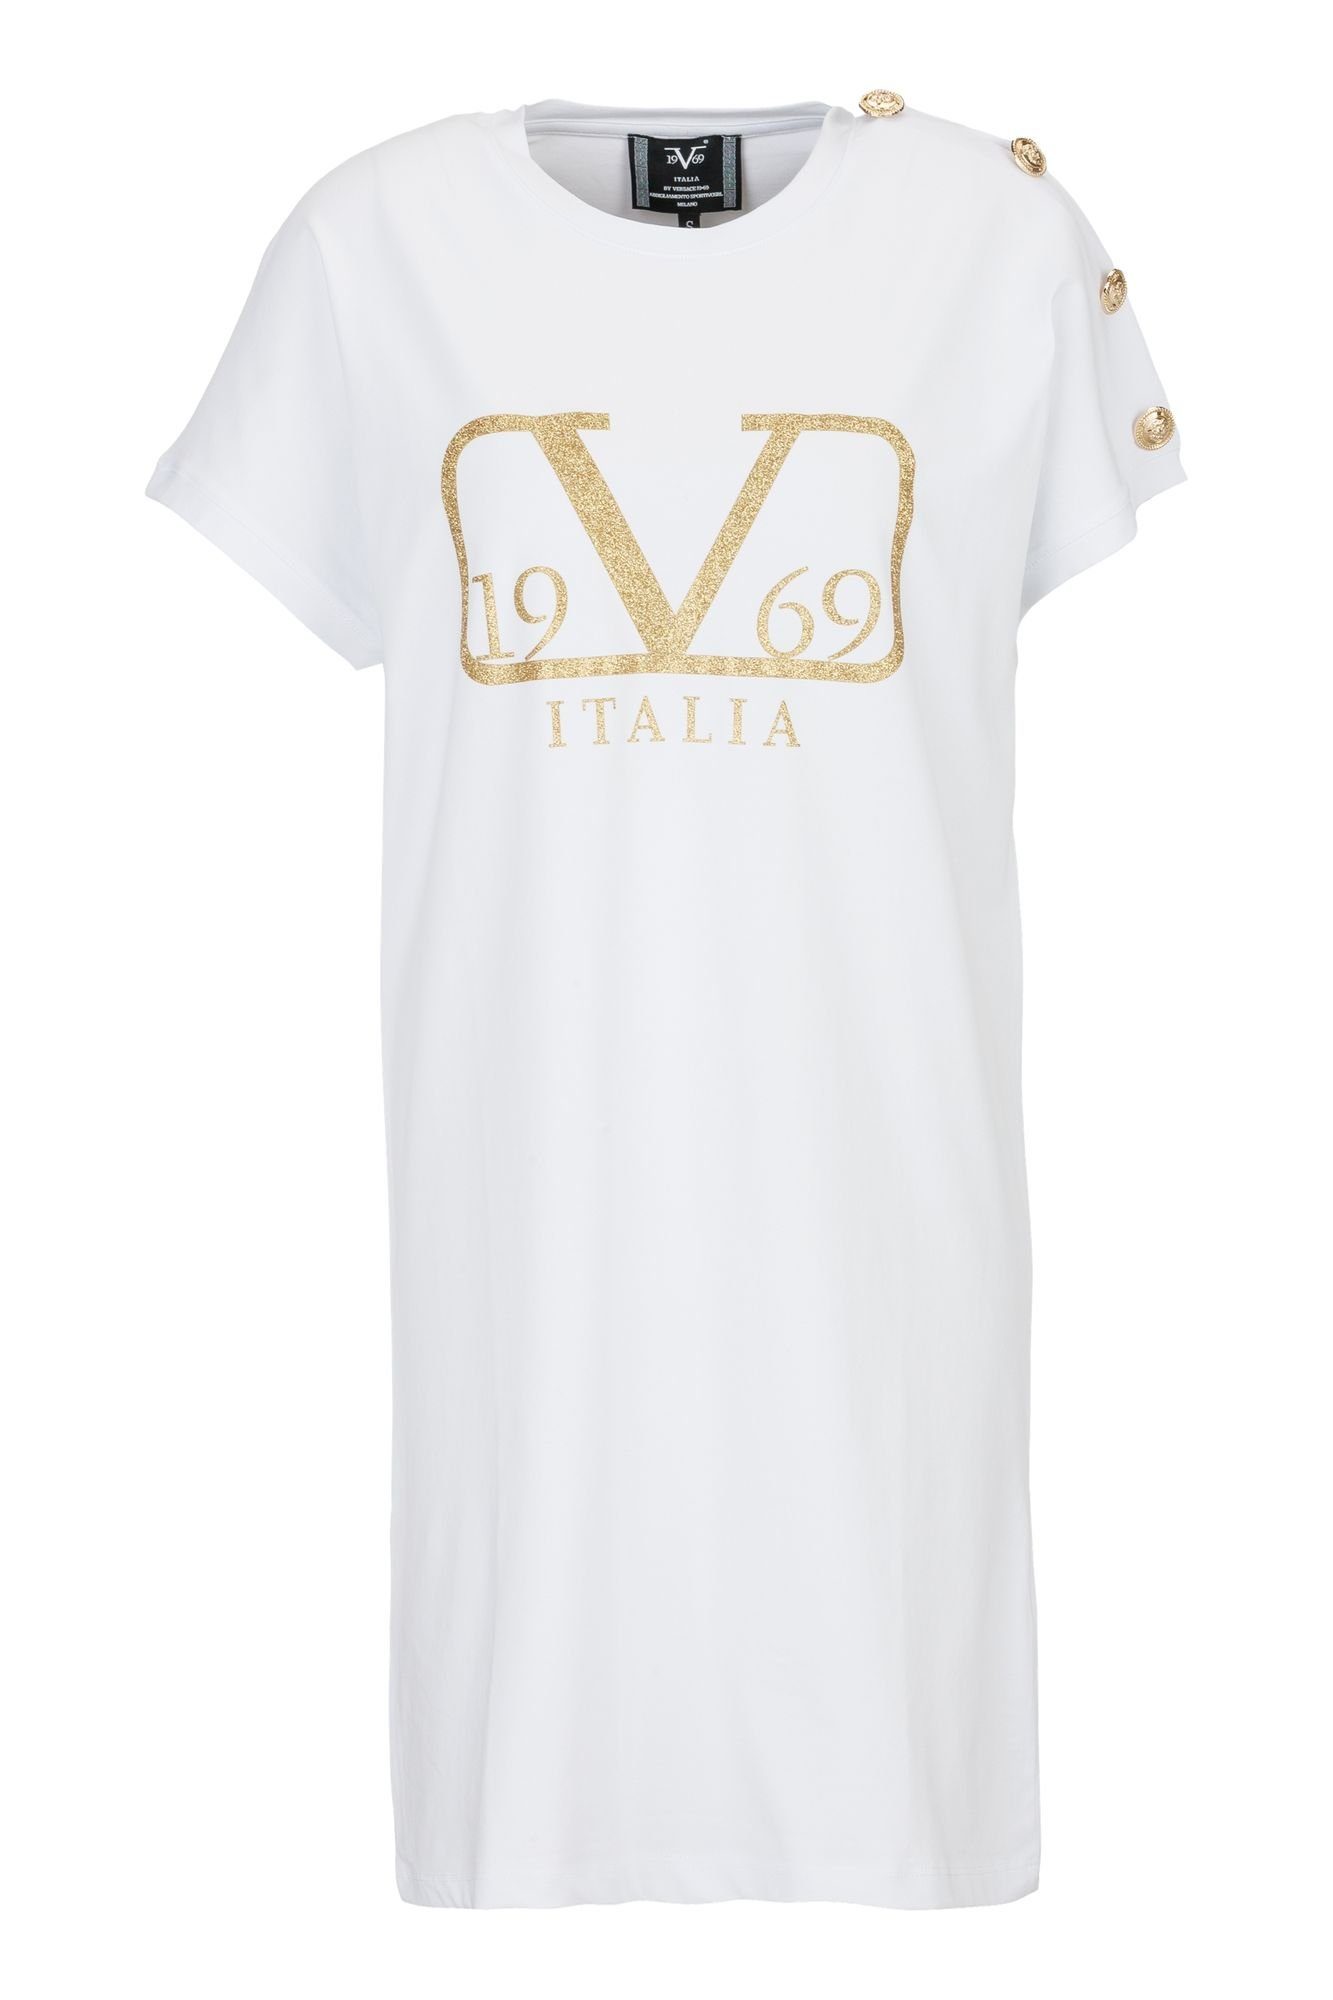 19V69 Italia by Versace T-Shirt Dana | T-Shirts